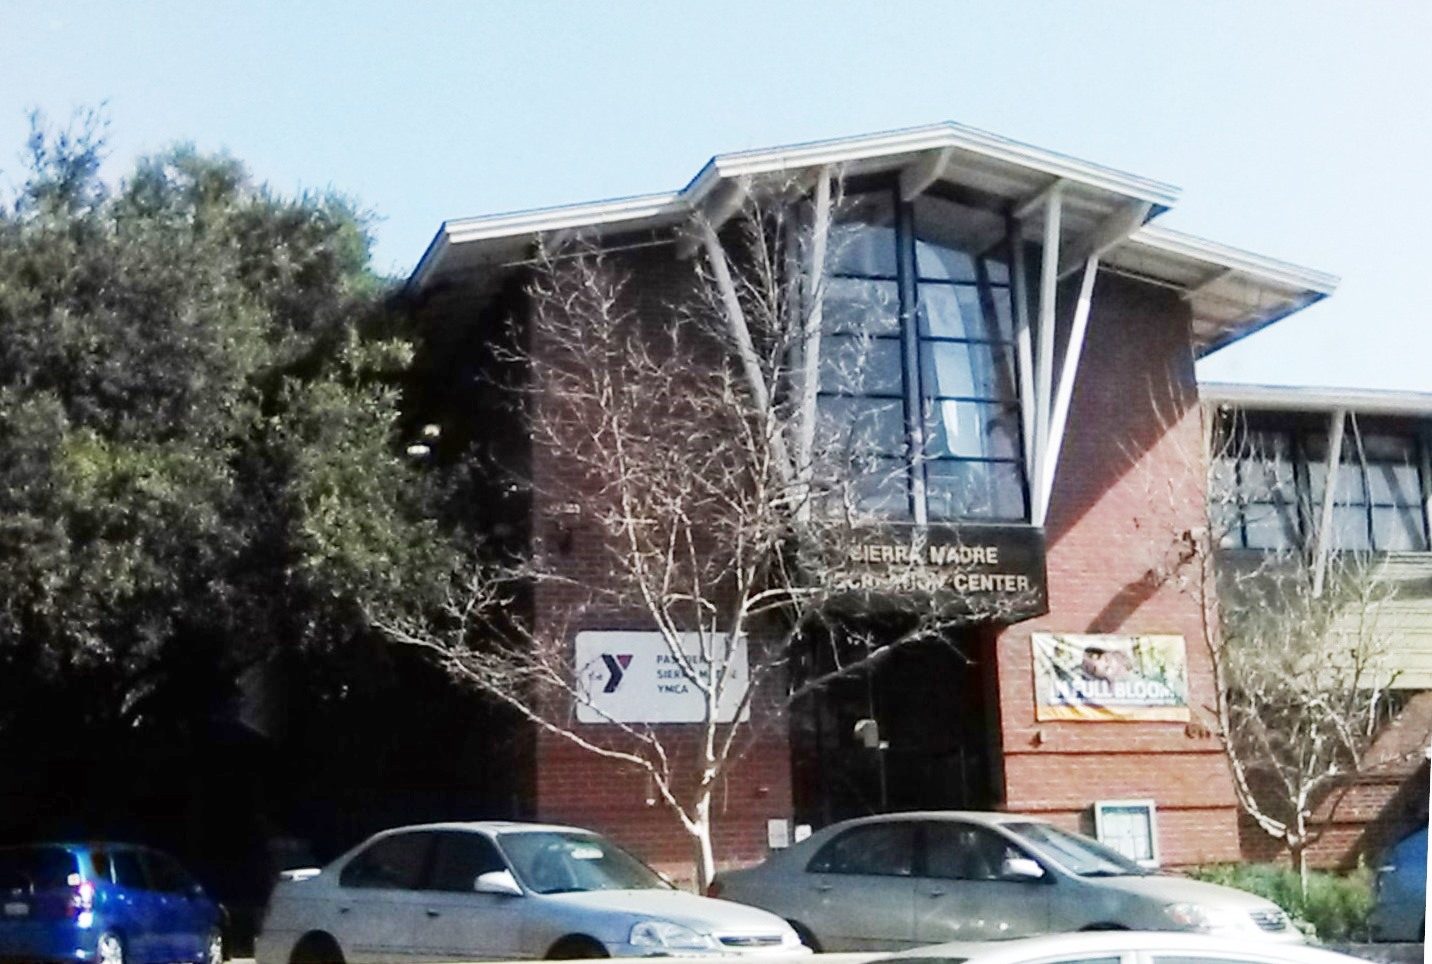 Pasadena-Sierra Madre YMCA